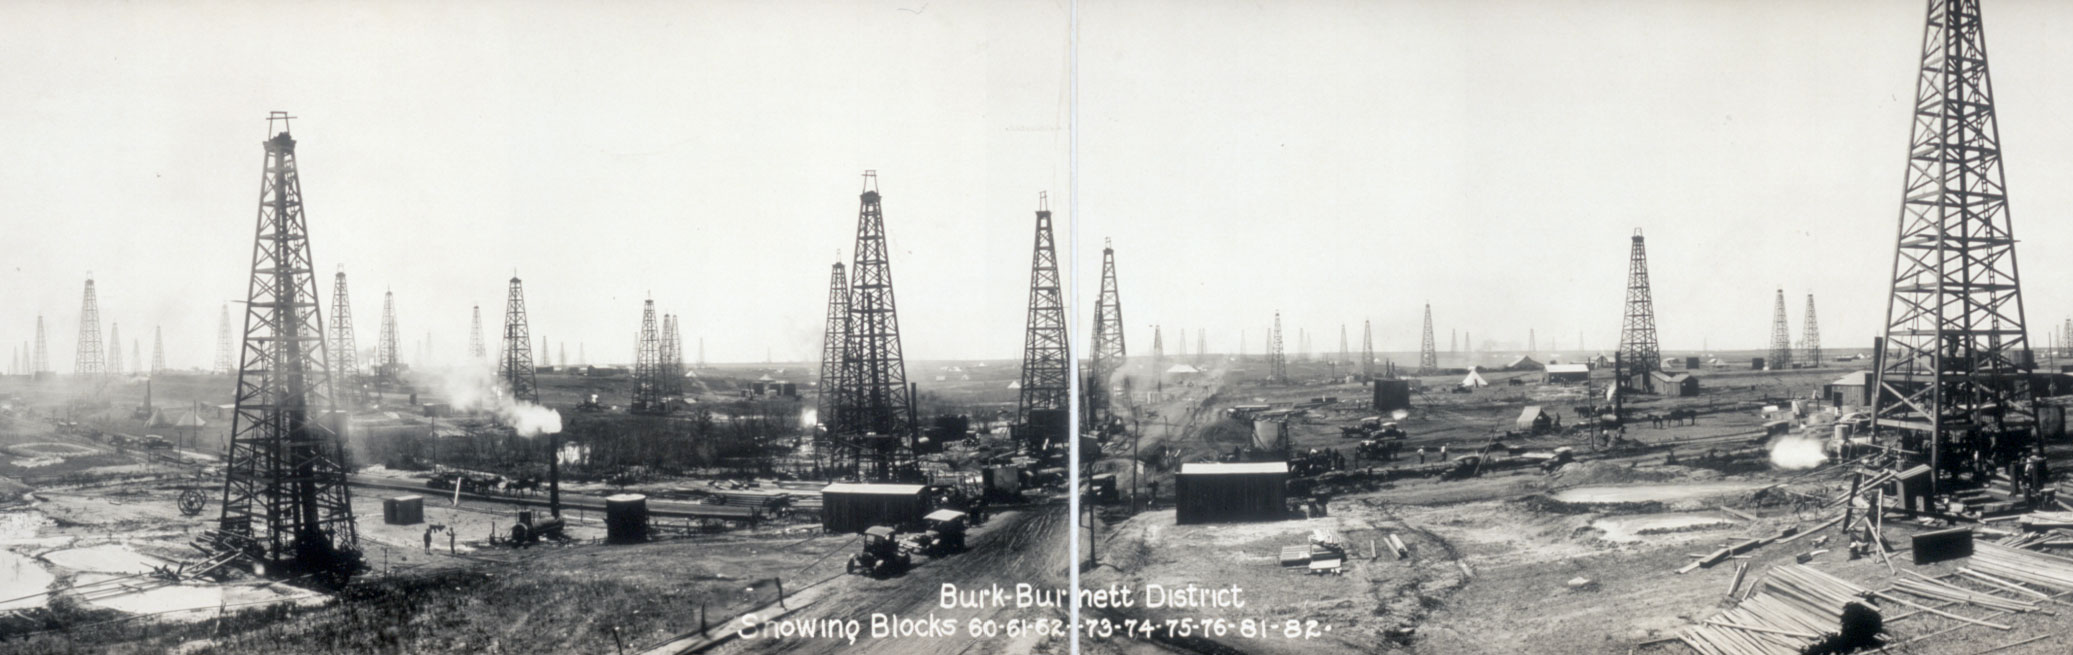 Black-and-white panoramic photo of oil derricks in the Burk-Burnett district, Fort Worth Basin, ca. 1919.